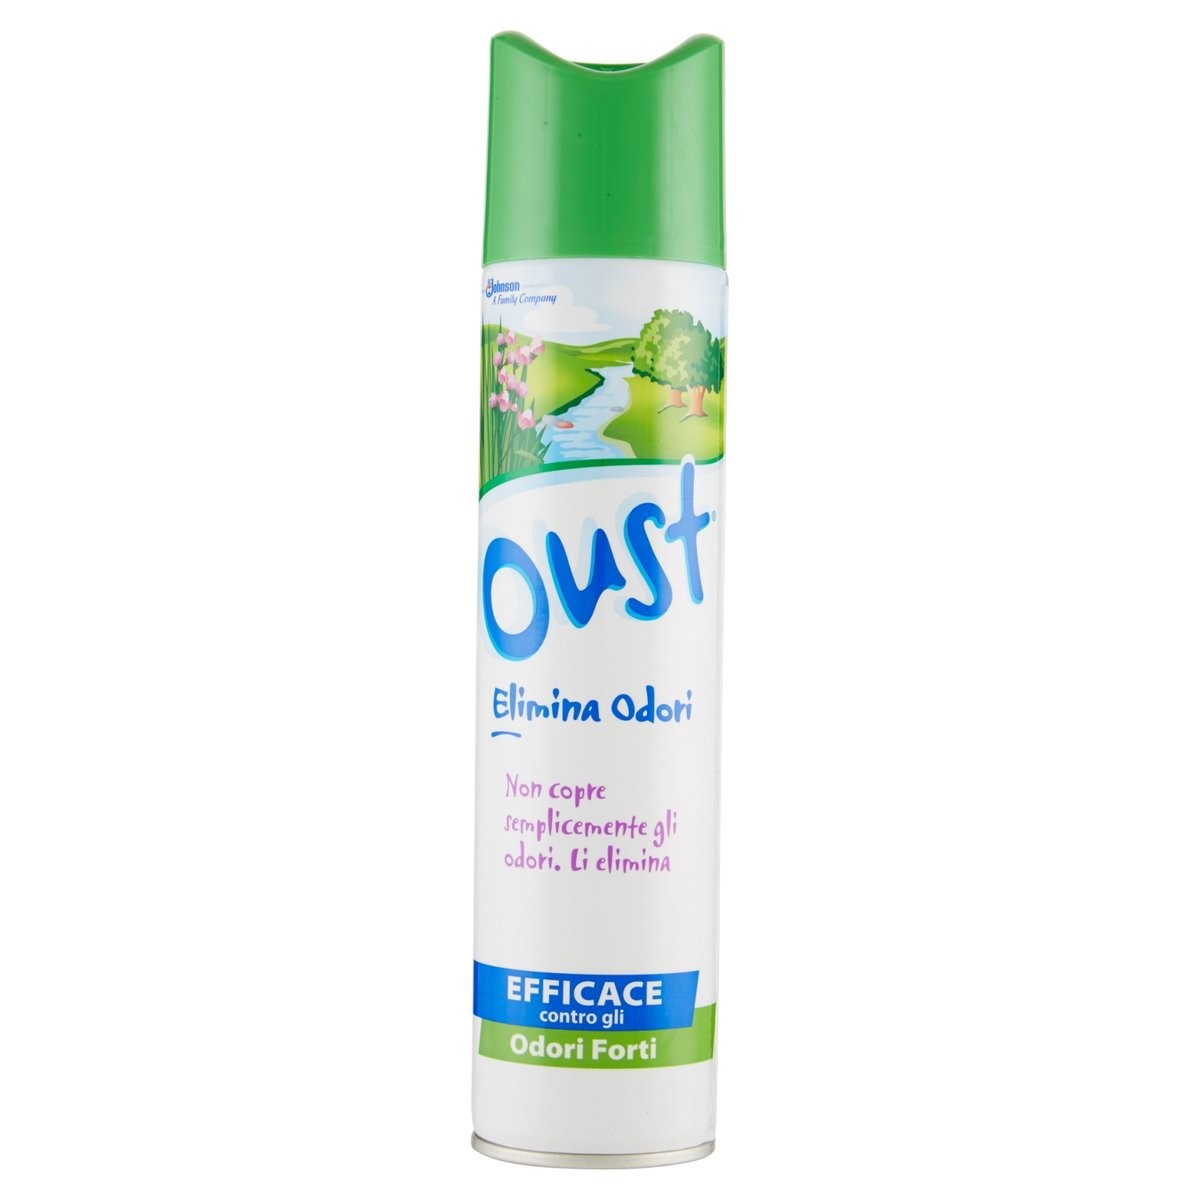 Oust Deodorante spray Elimina Odori